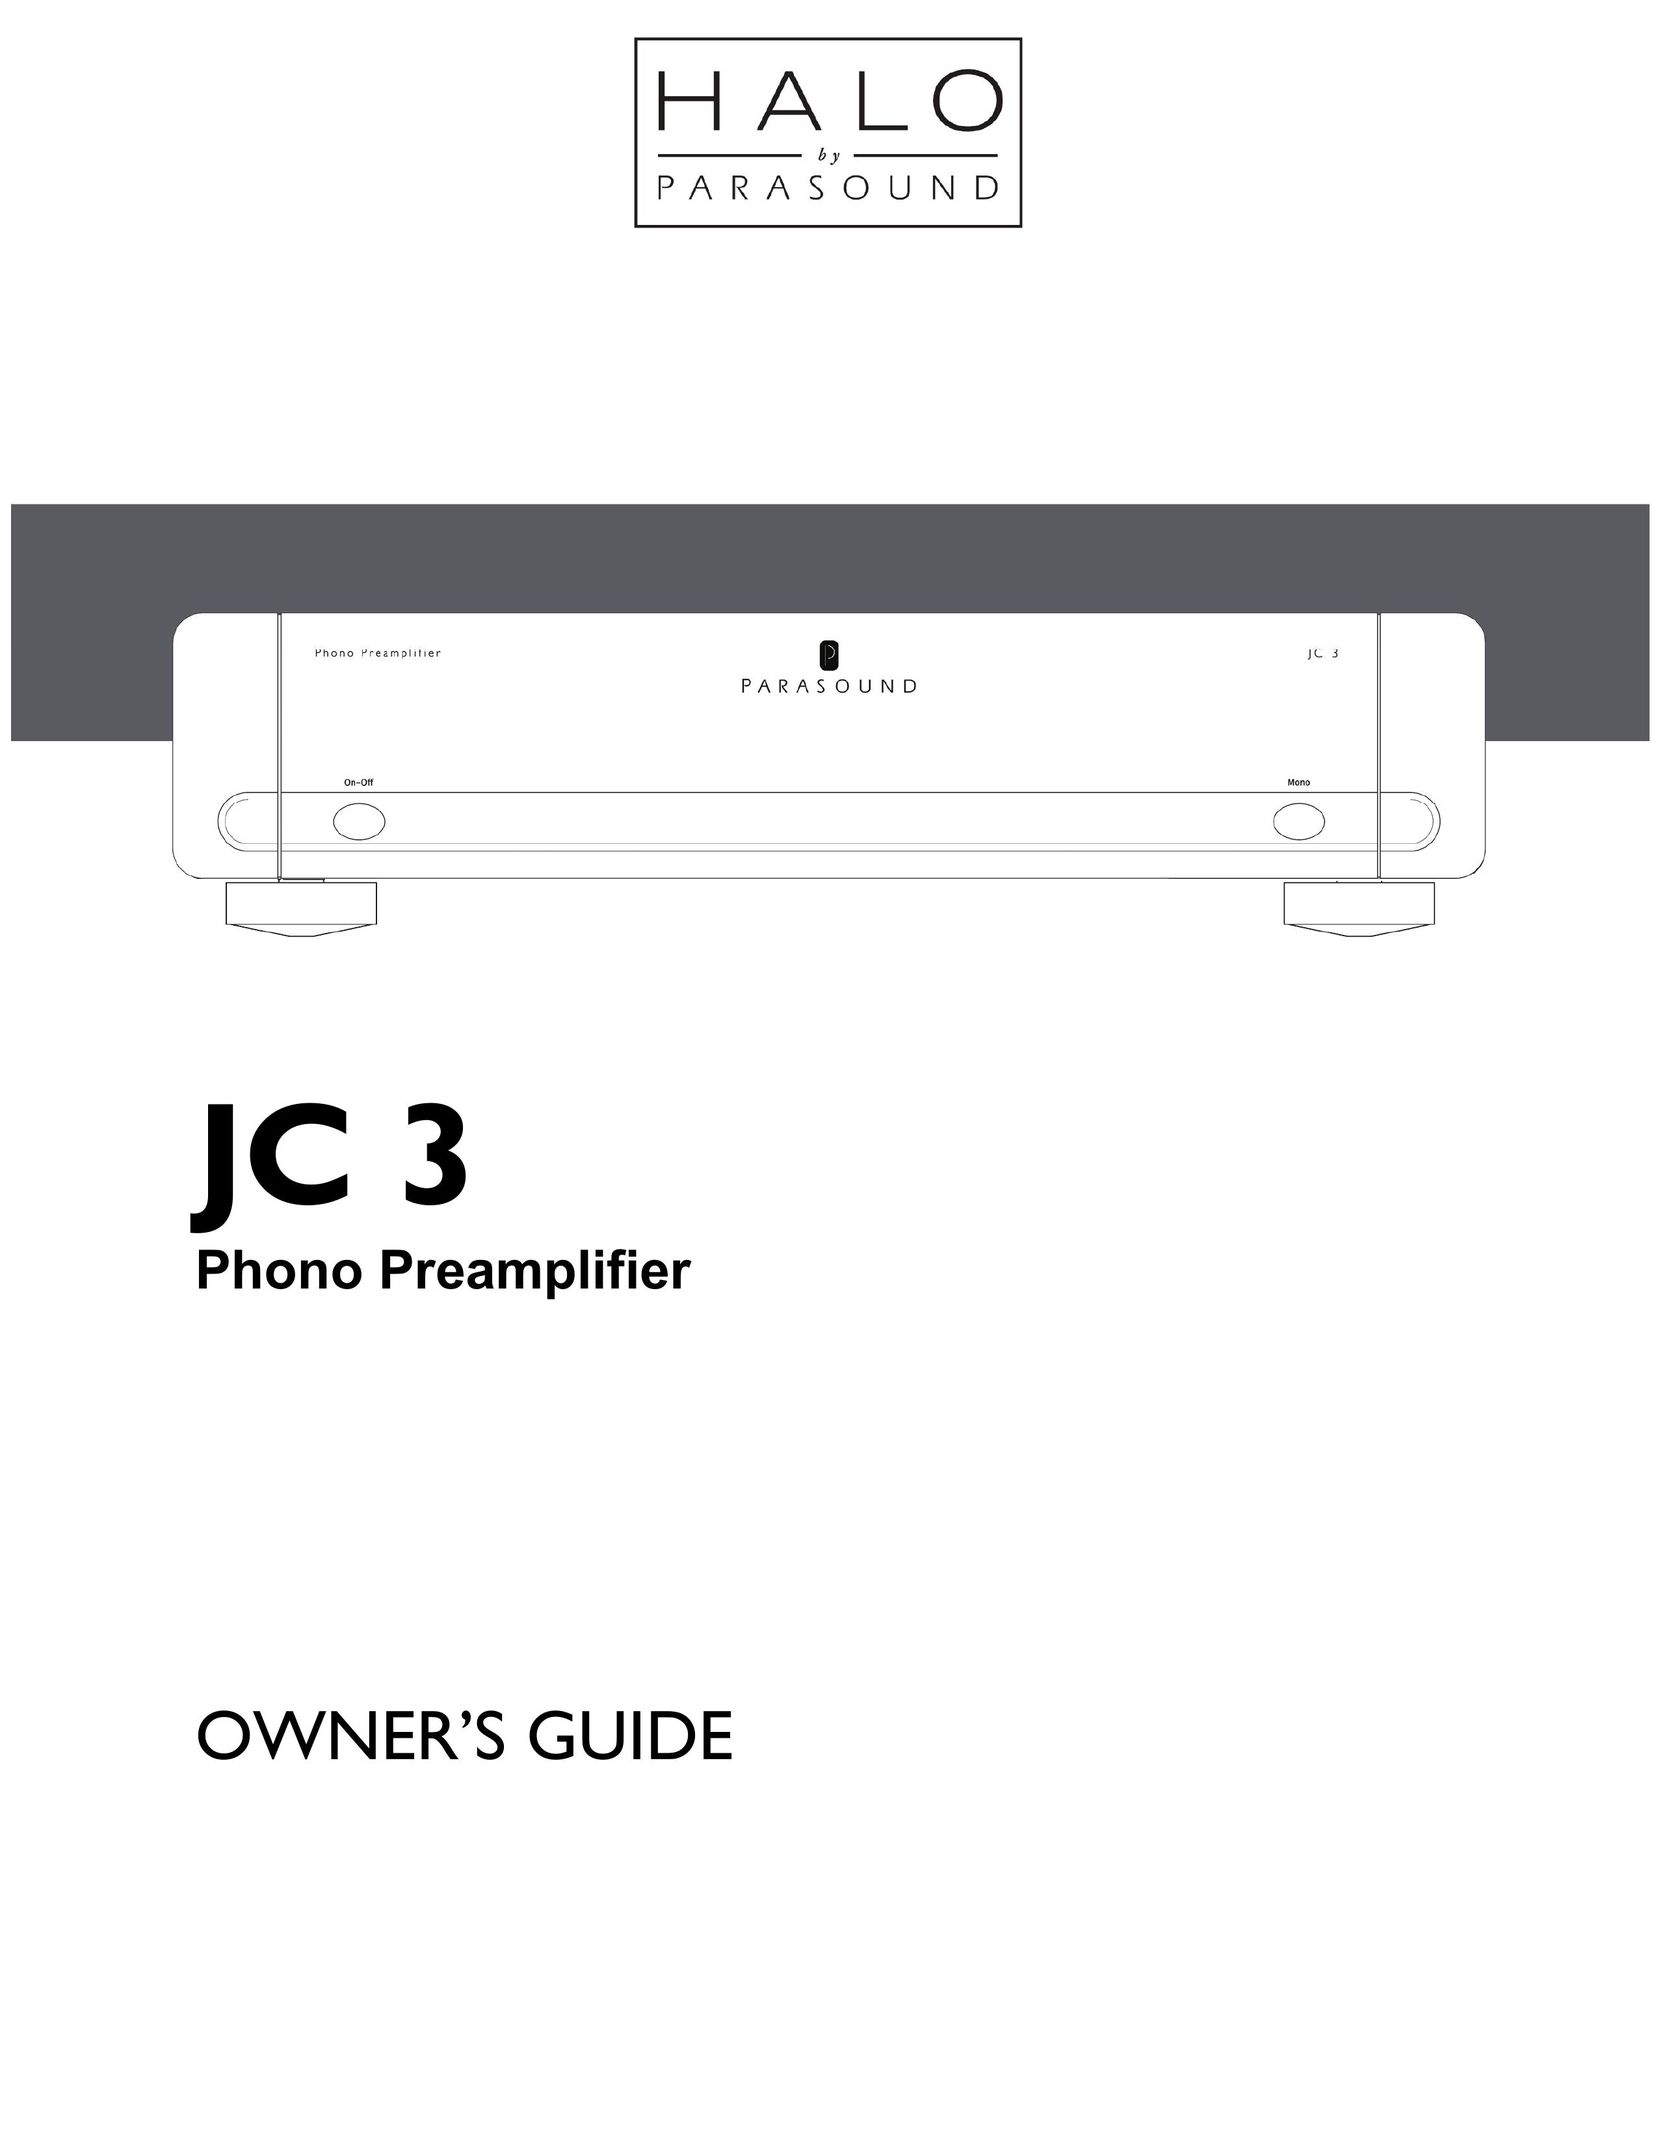 Parasound JC 3 Stereo Amplifier User Manual